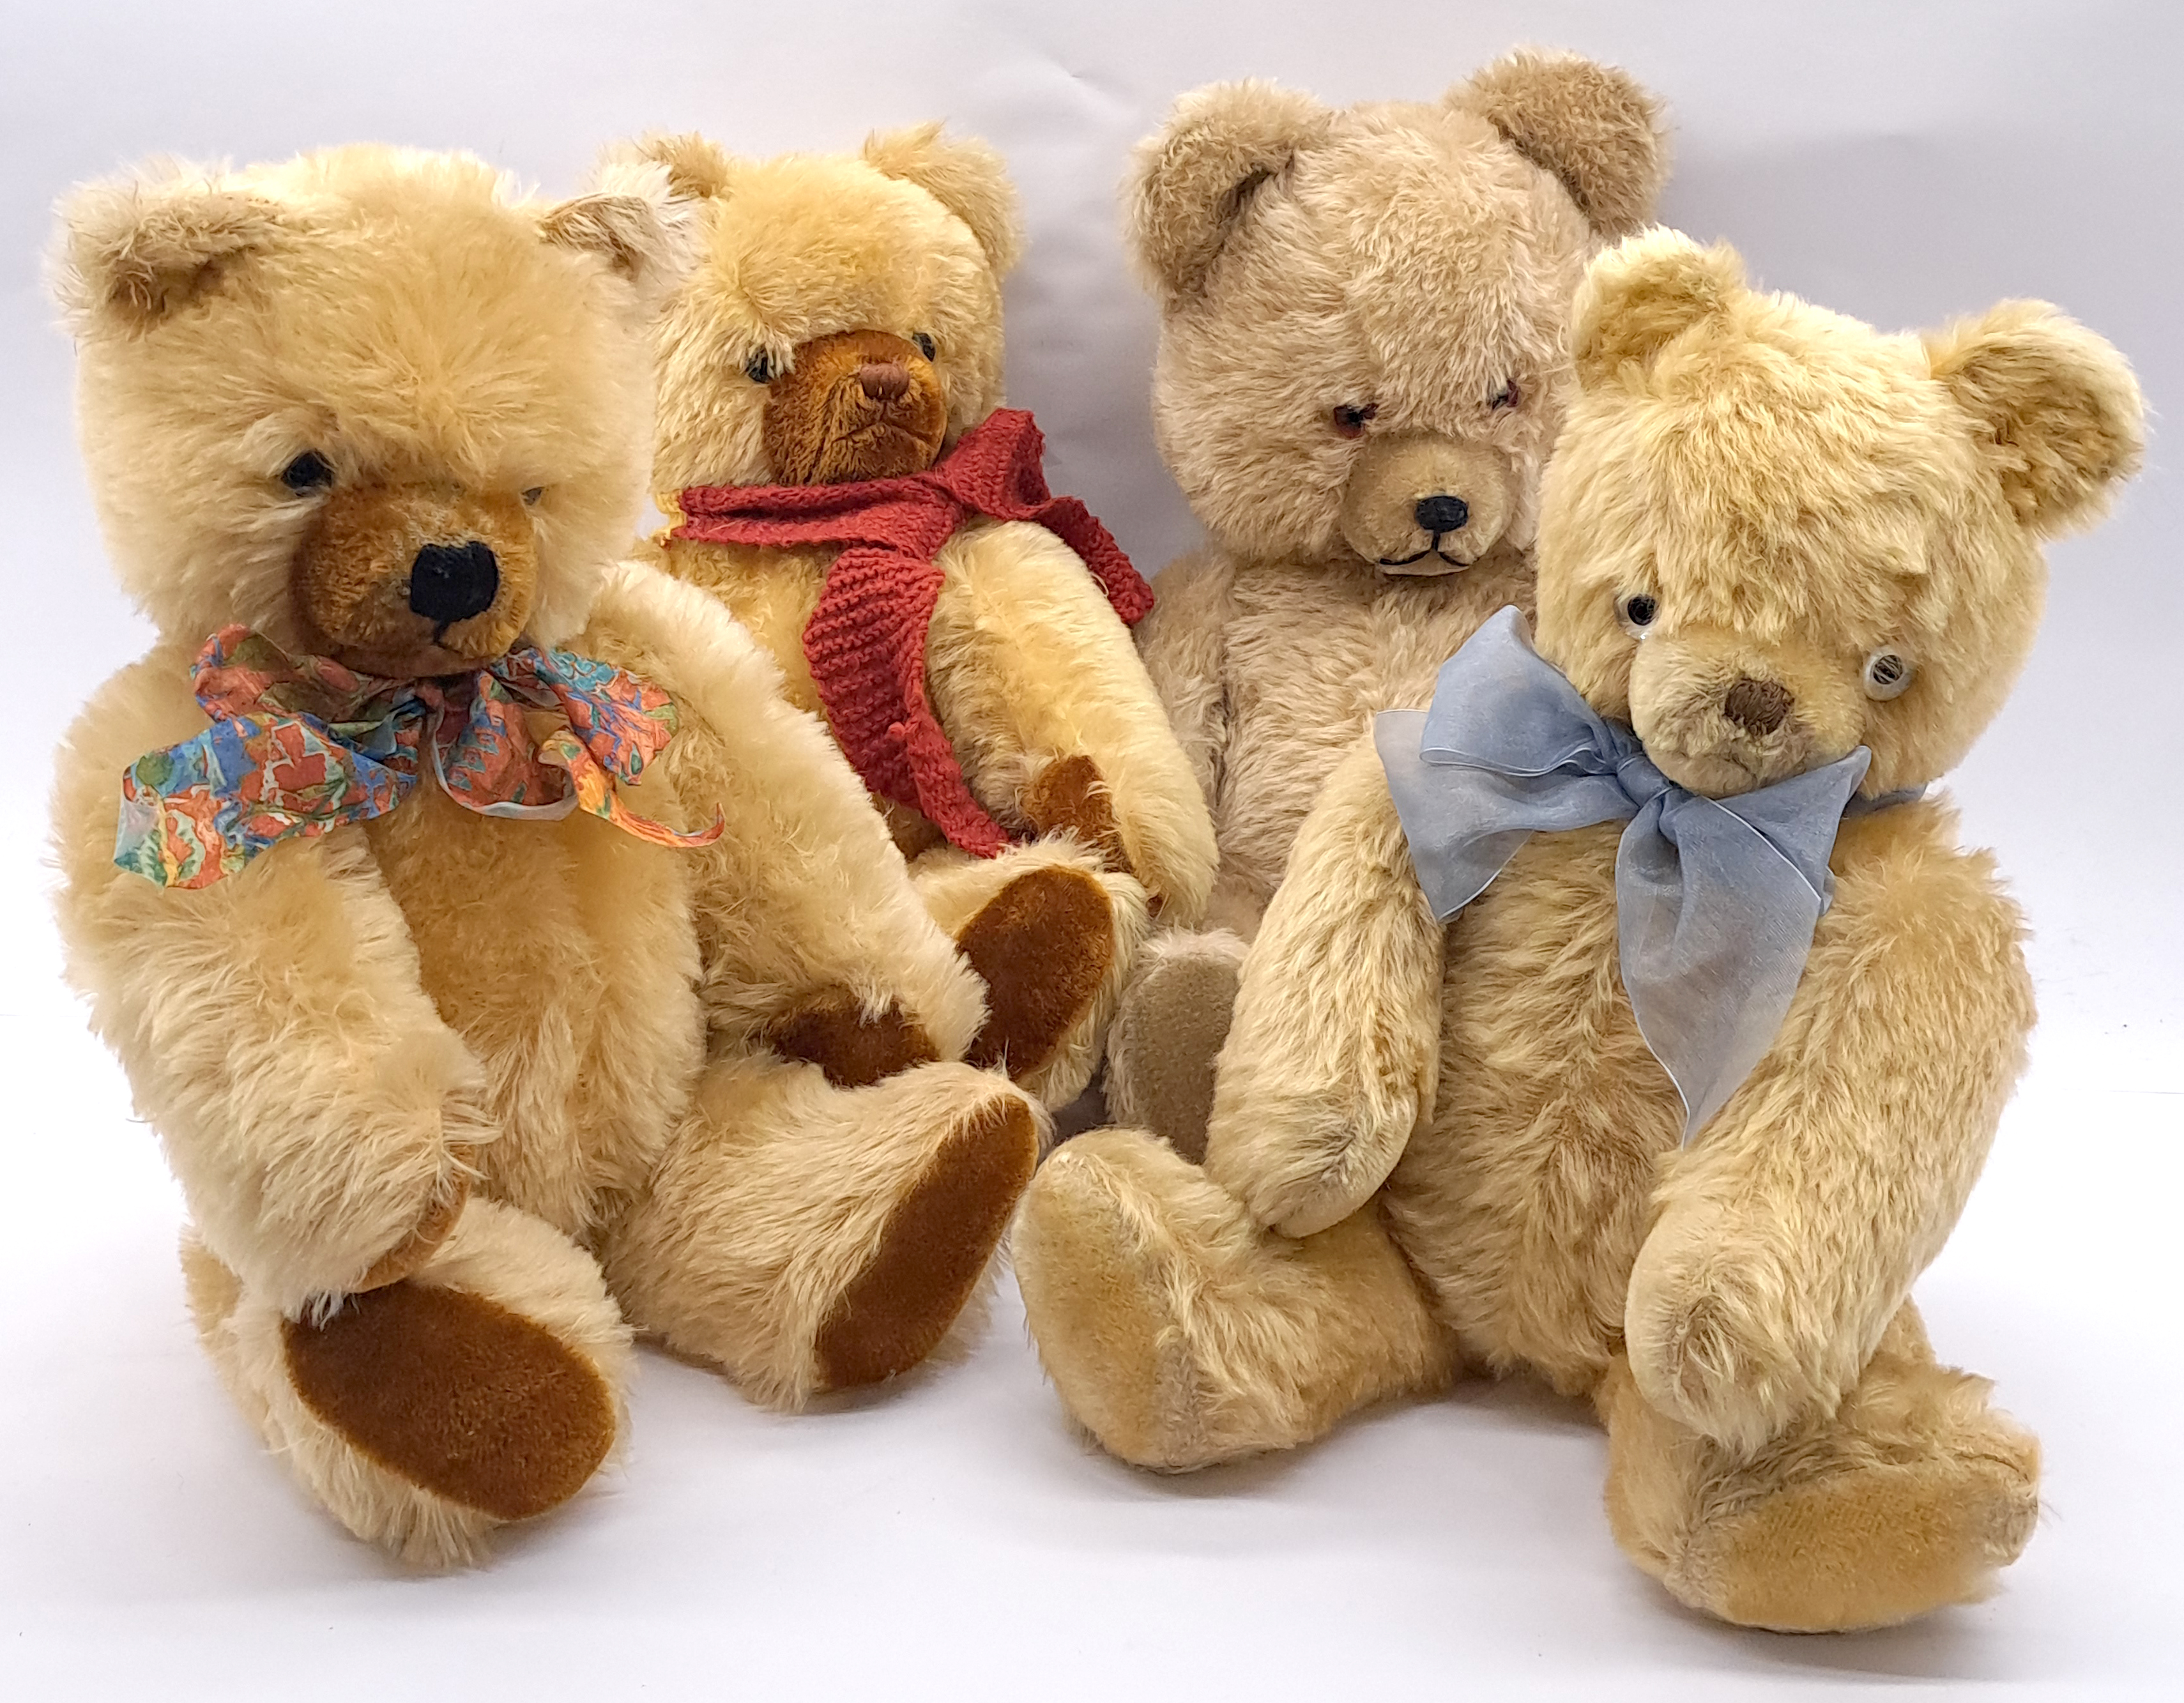 Hamiro/Hamiro-type group of vintage teddy bears and similar